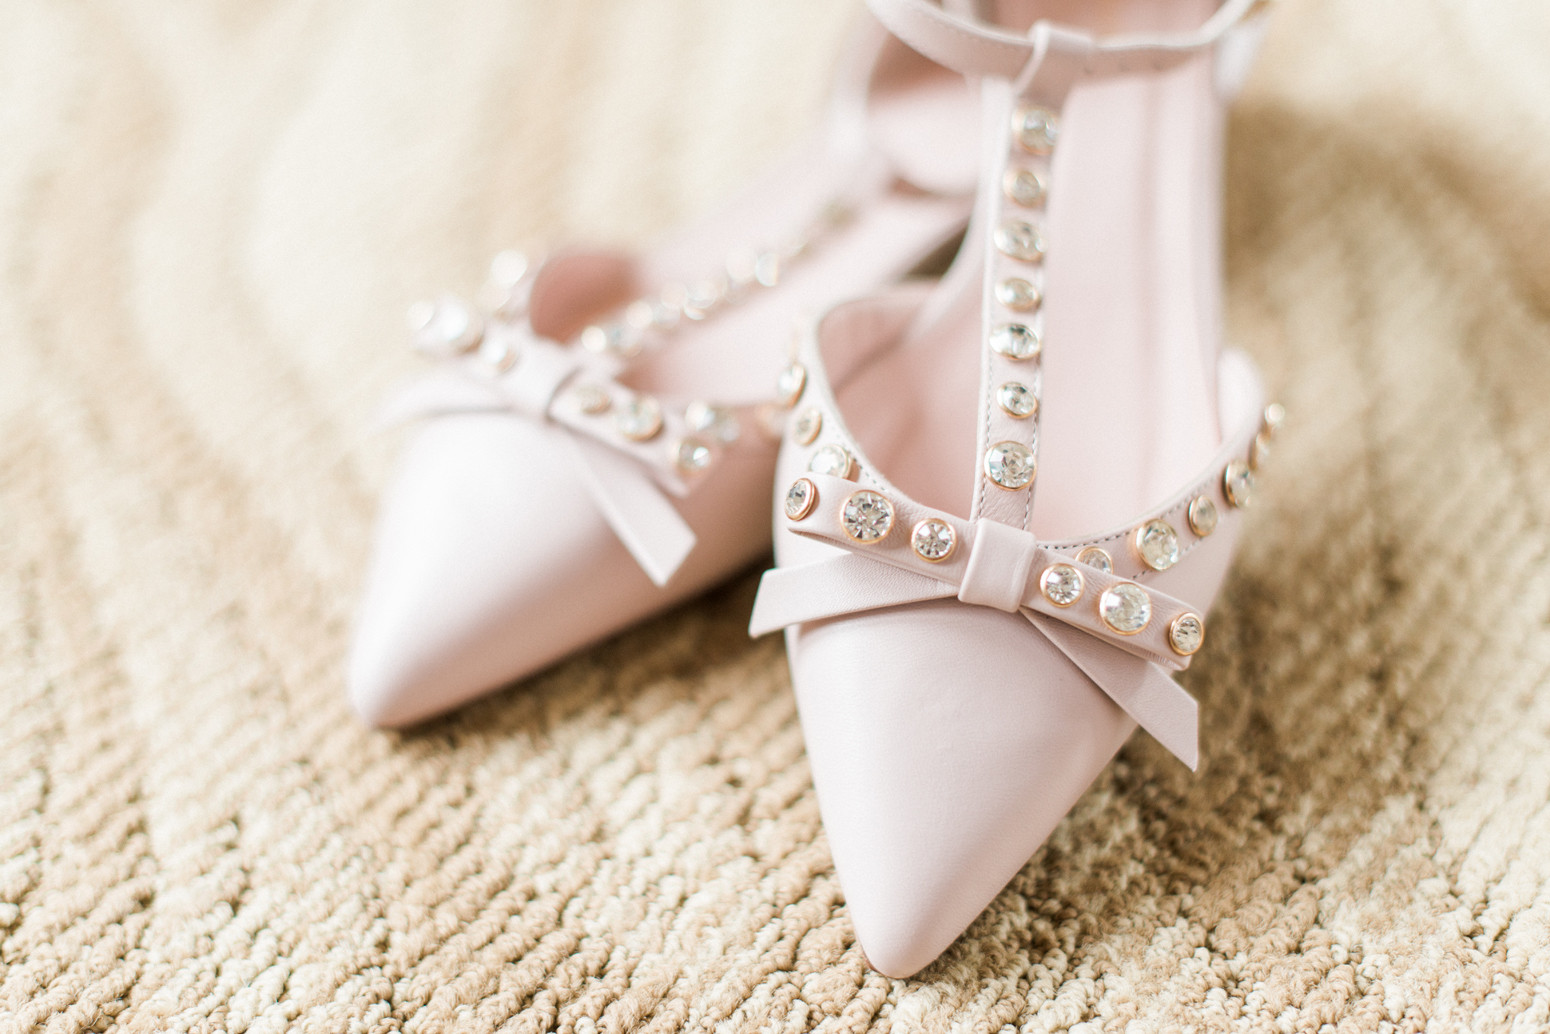 Stylish and Comfortable Kate Spade Wedding Shoes to Shine